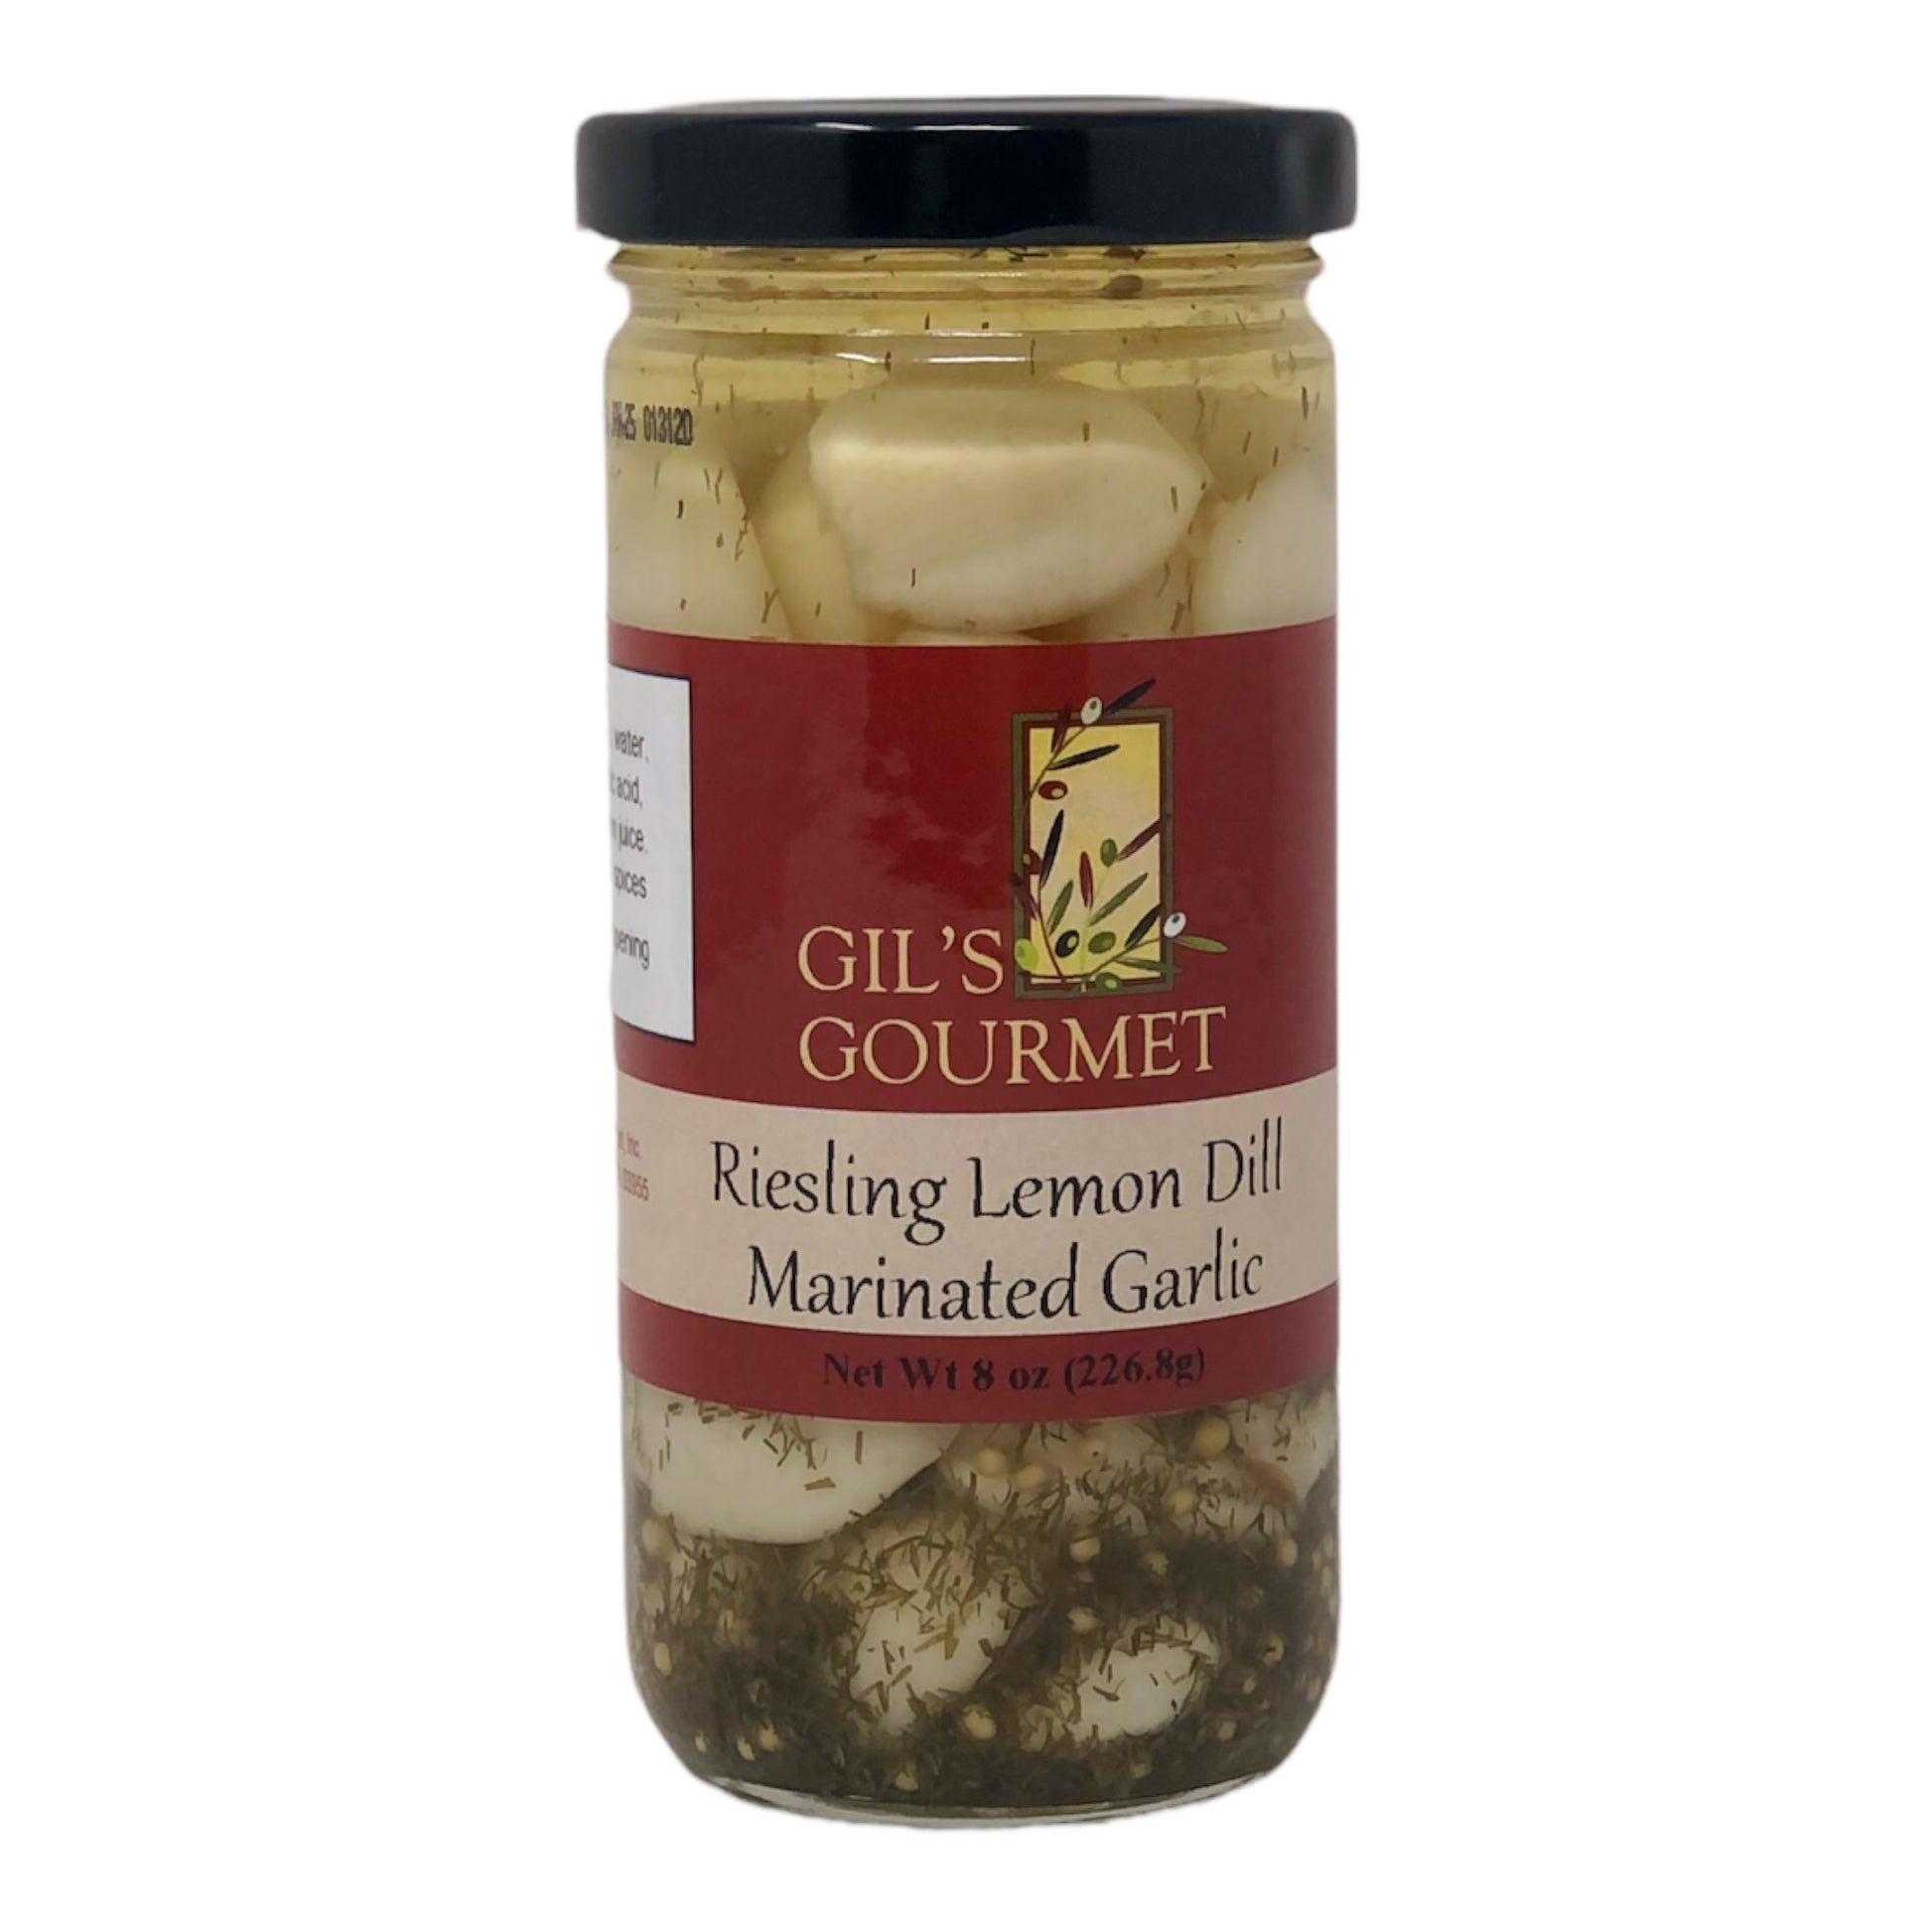 Gil's Gourmet Riesling Lemon Dill Marinated Garlic